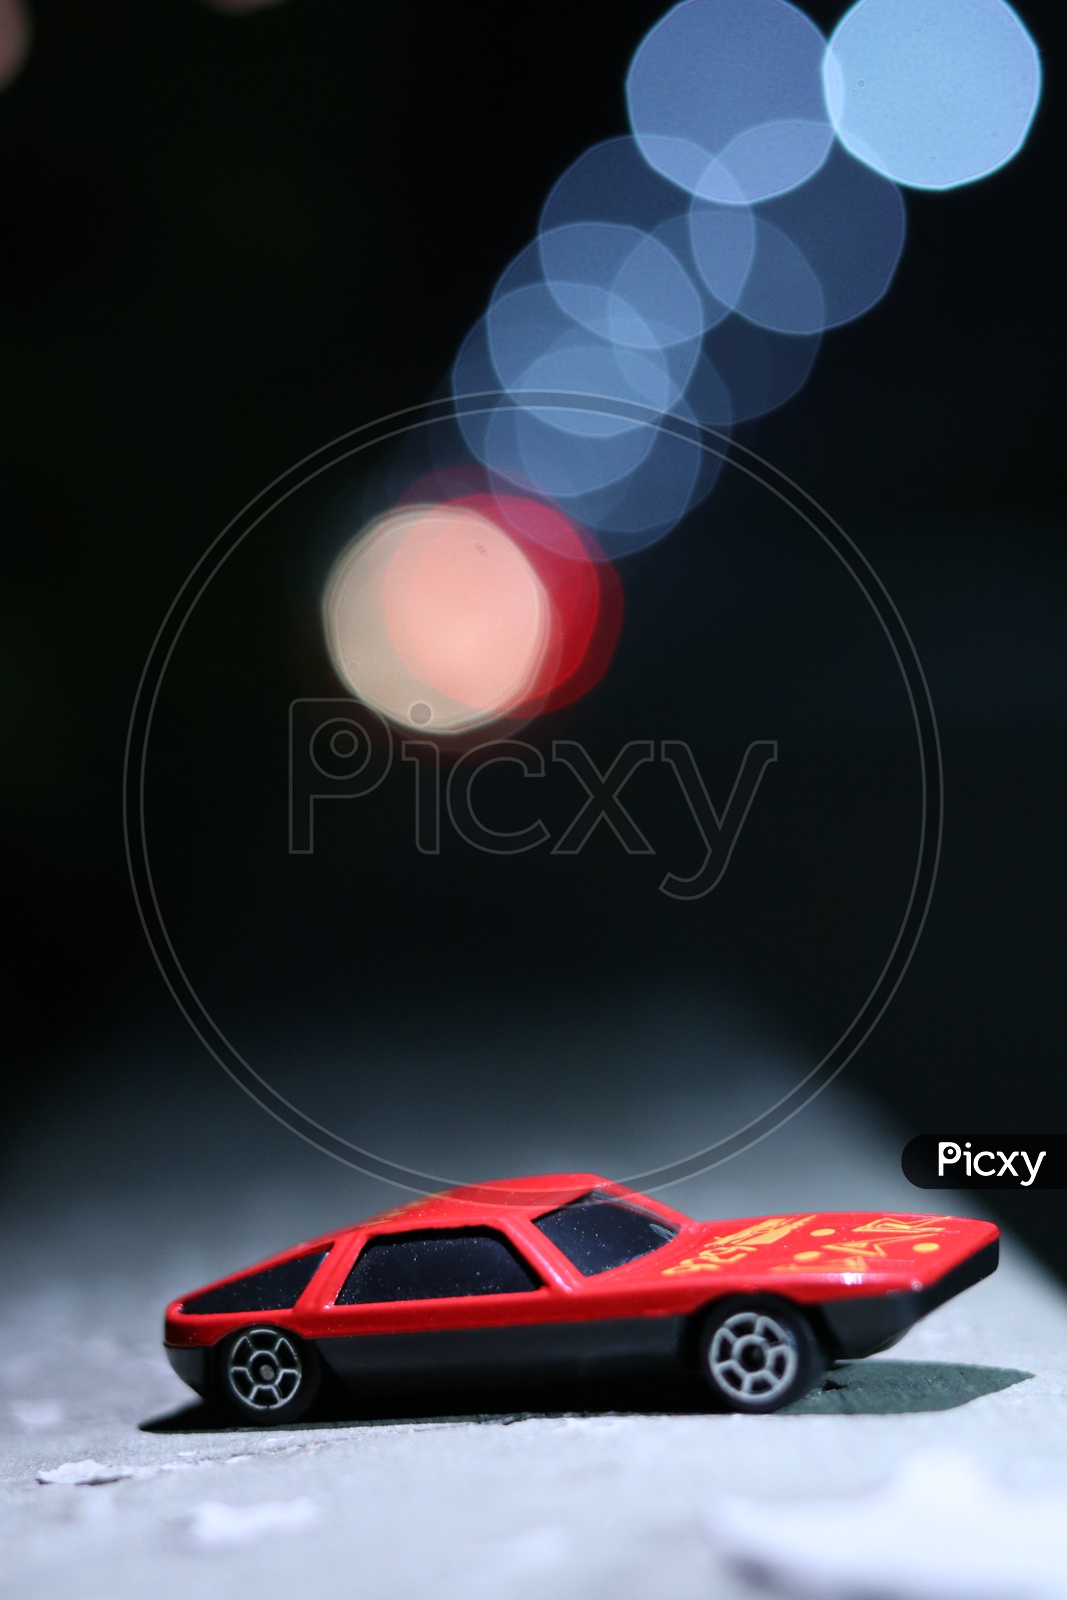 Car toy Closeup Shot With Led Light bokeh Effect